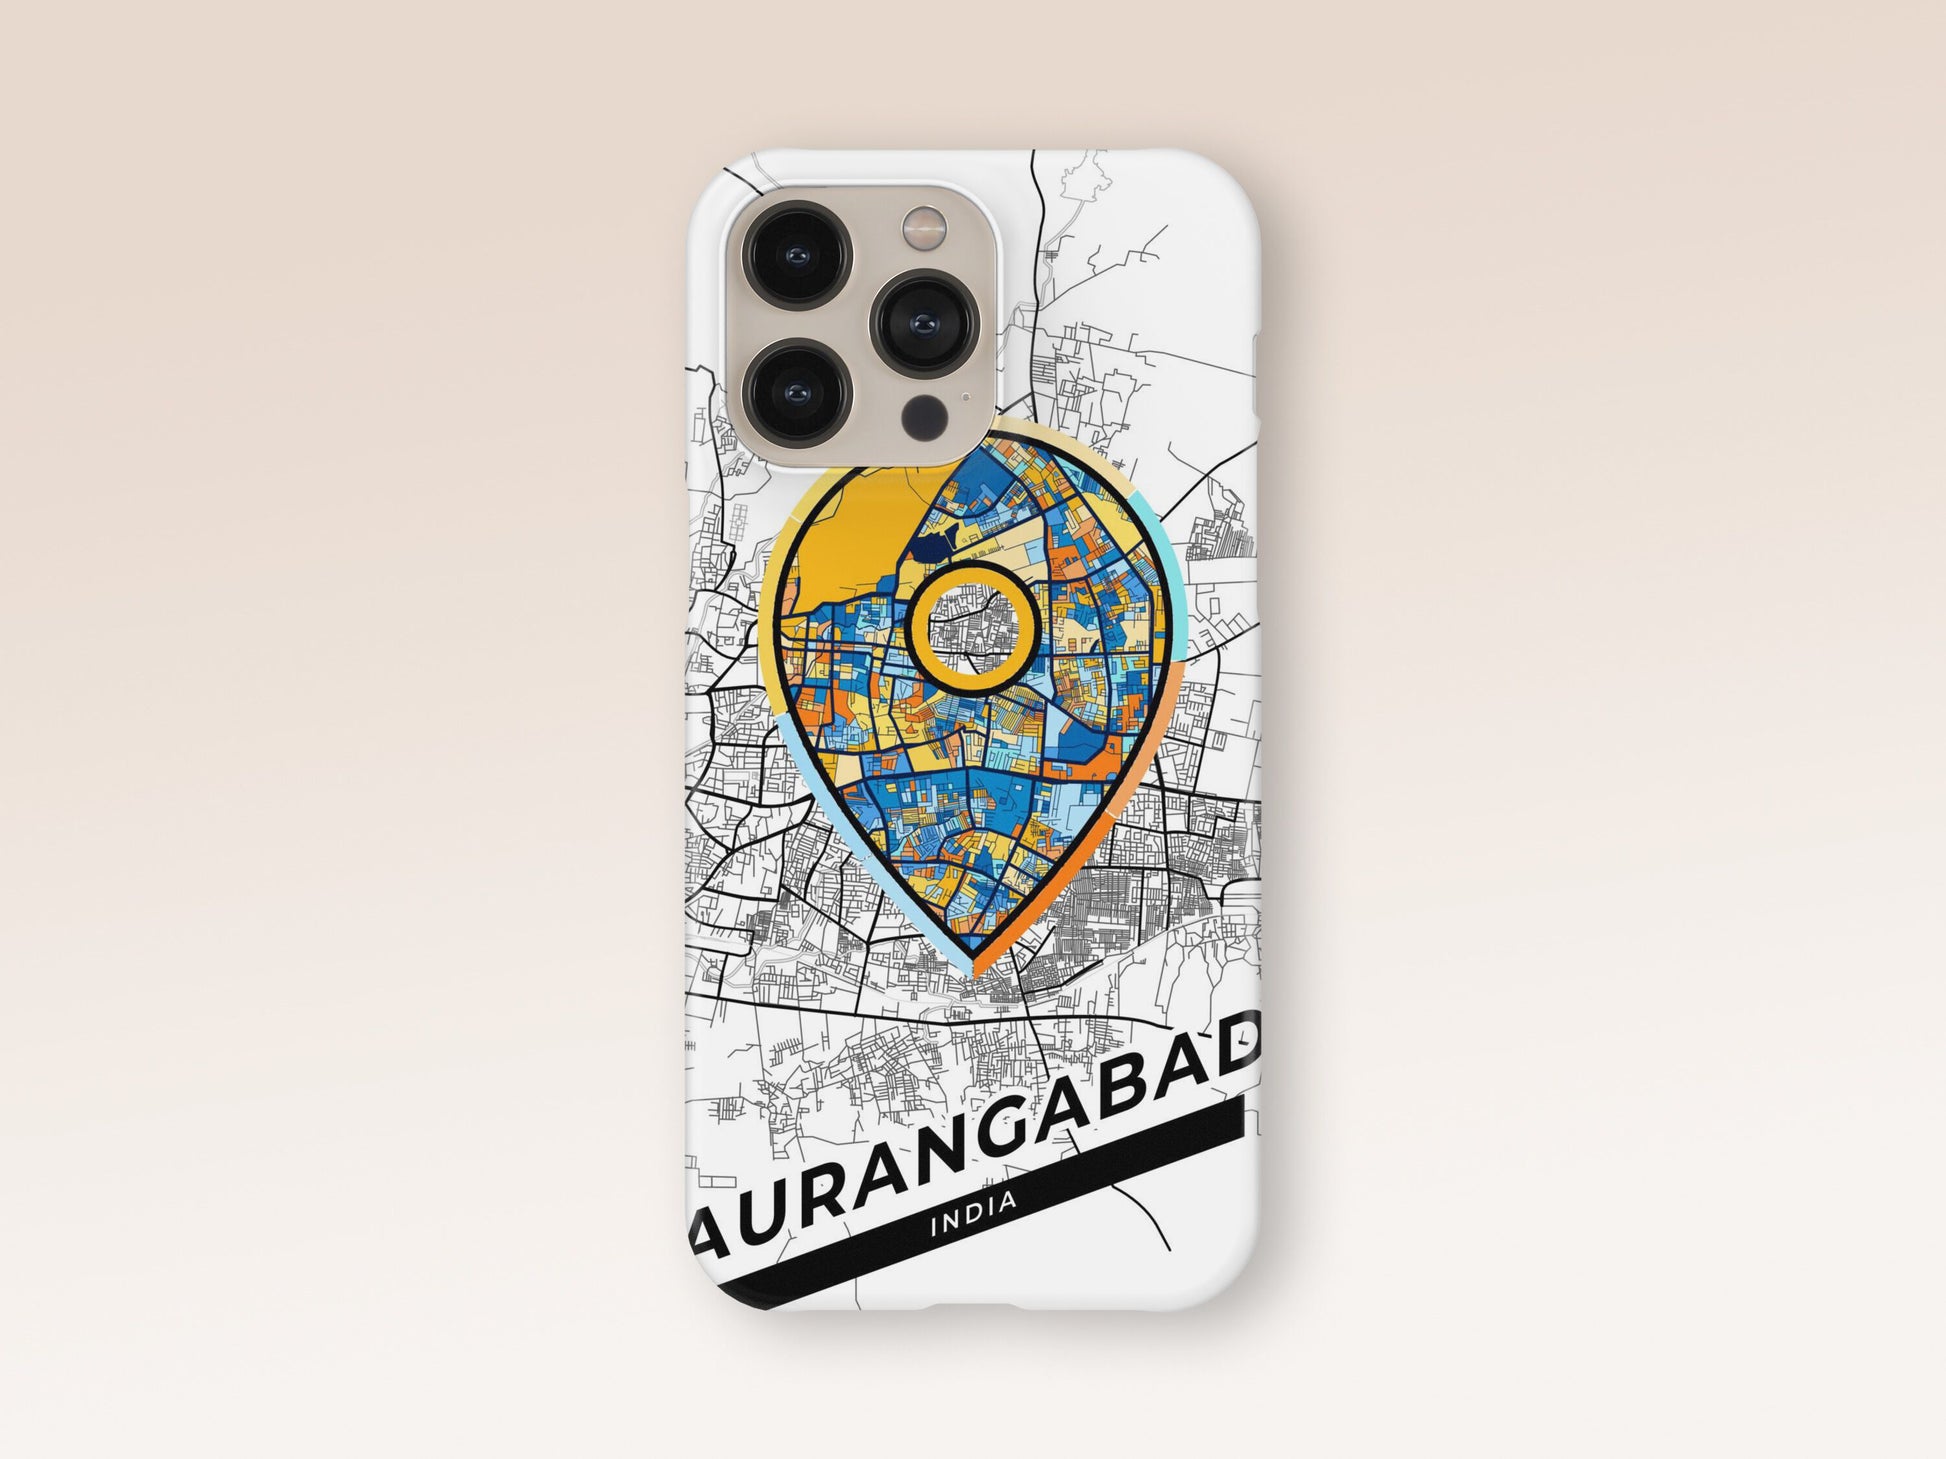 Aurangabad India slim phone case with colorful icon. Birthday, wedding or housewarming gift. Couple match cases. 1